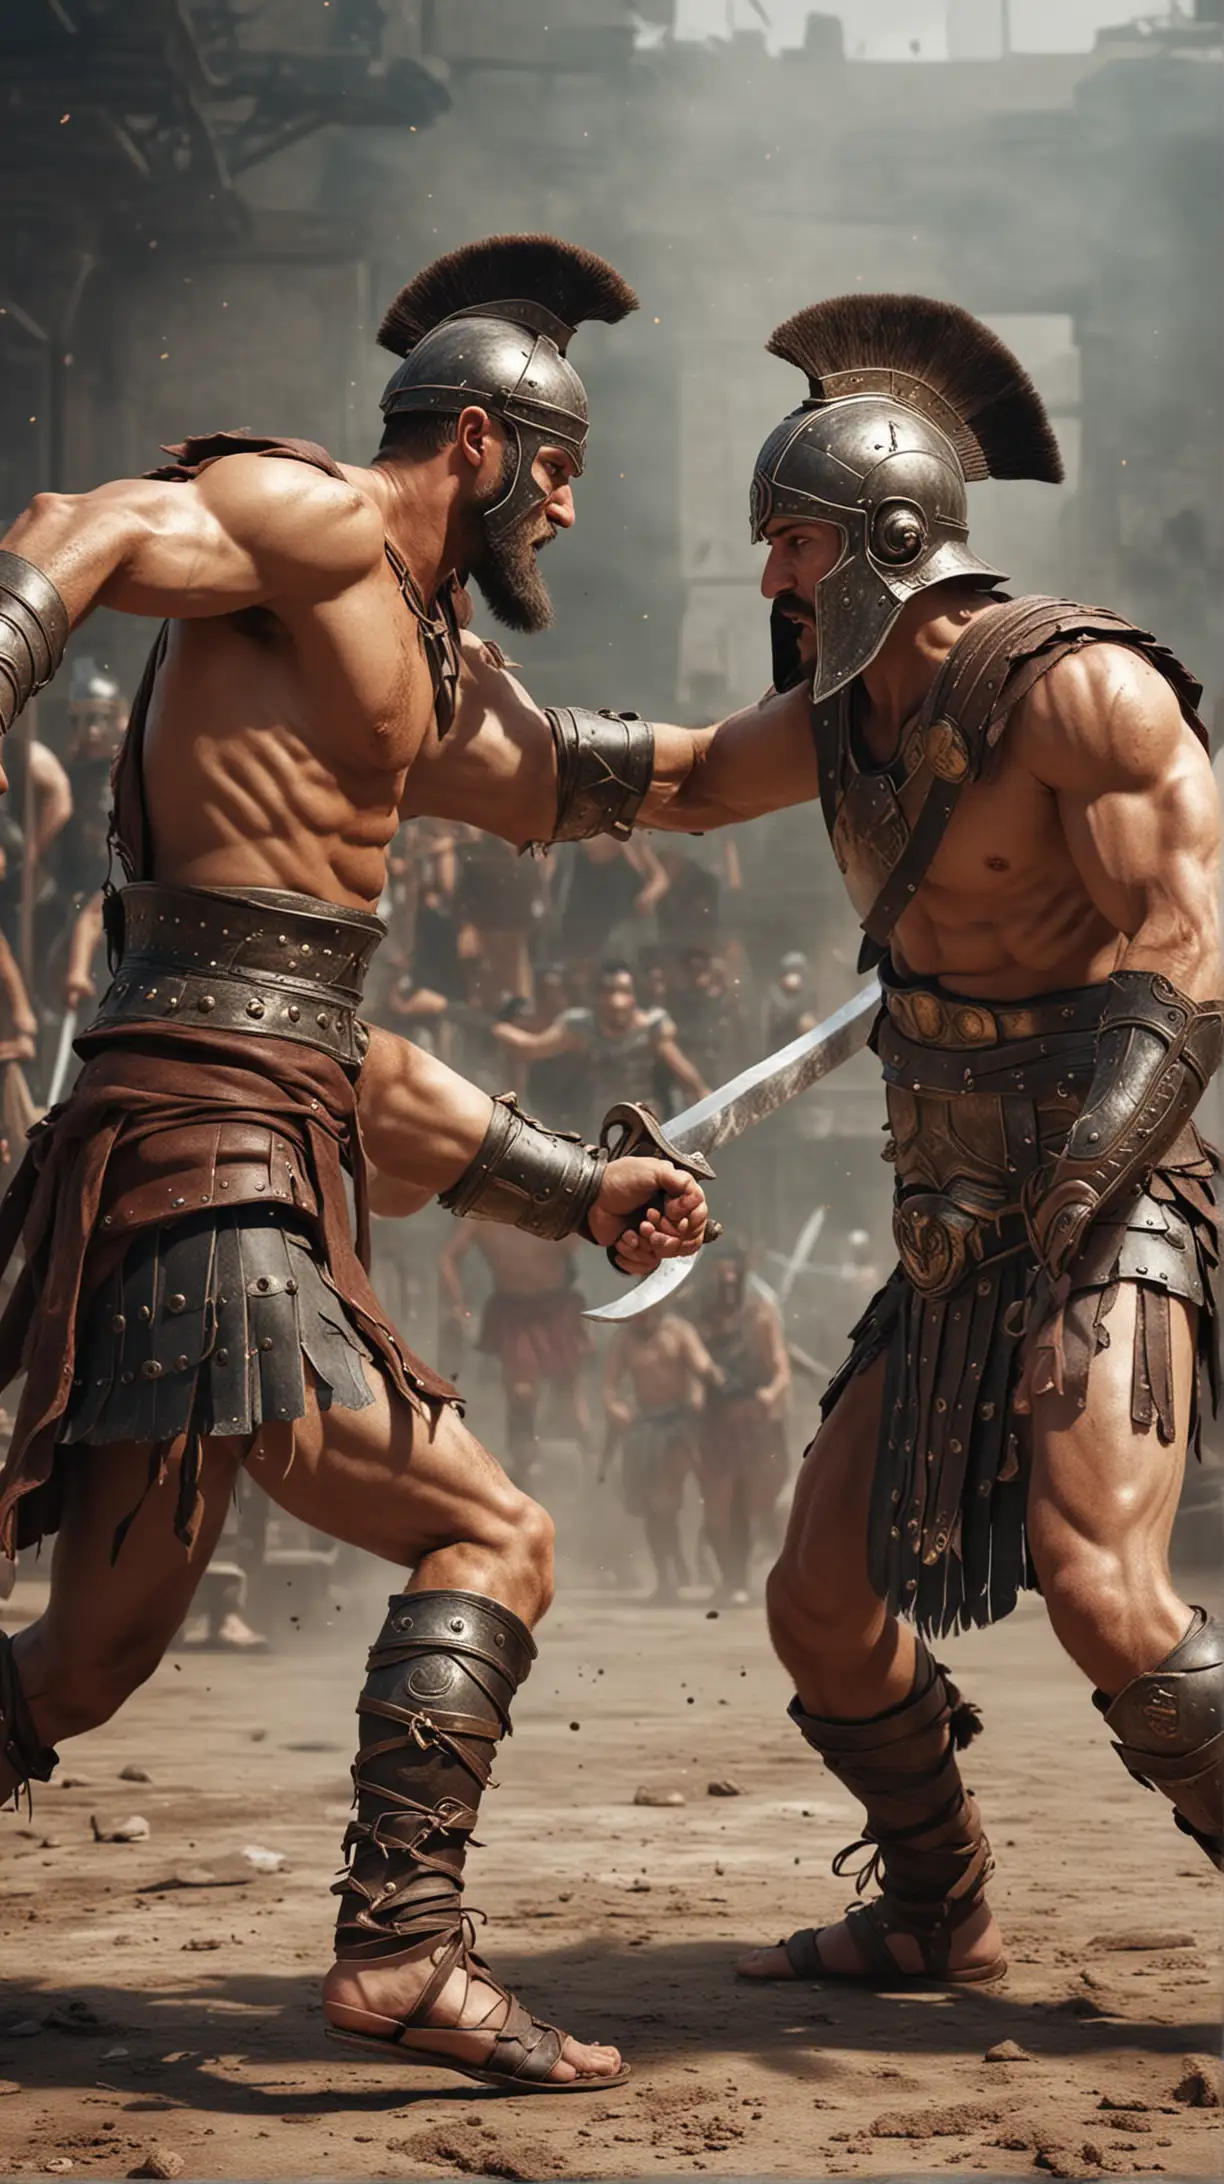 Hyper Realistic Ancient Gladiator Fighting Scene